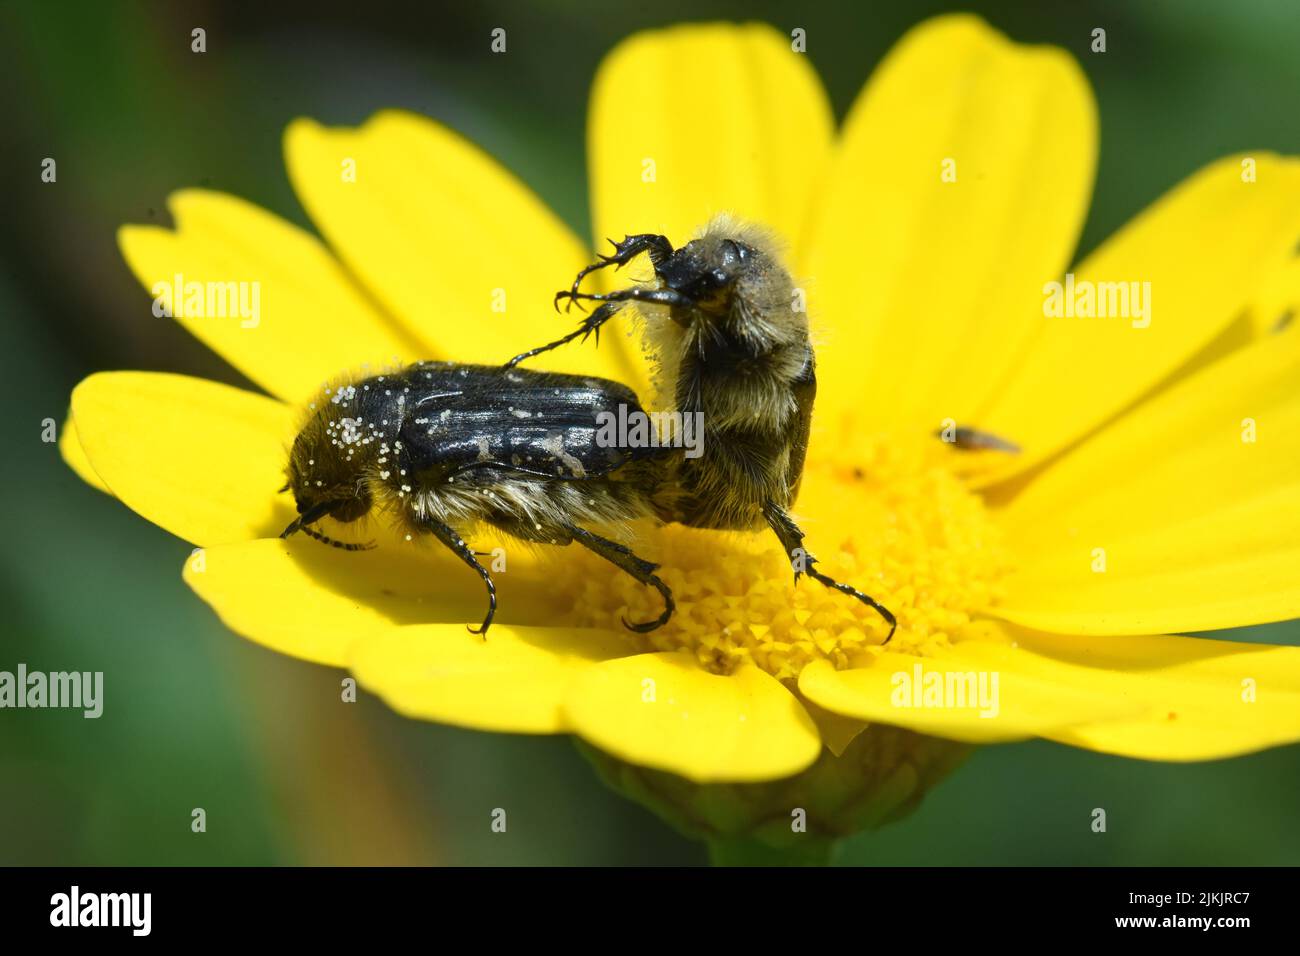 Black beetles mating on yellow flower Stock Photo